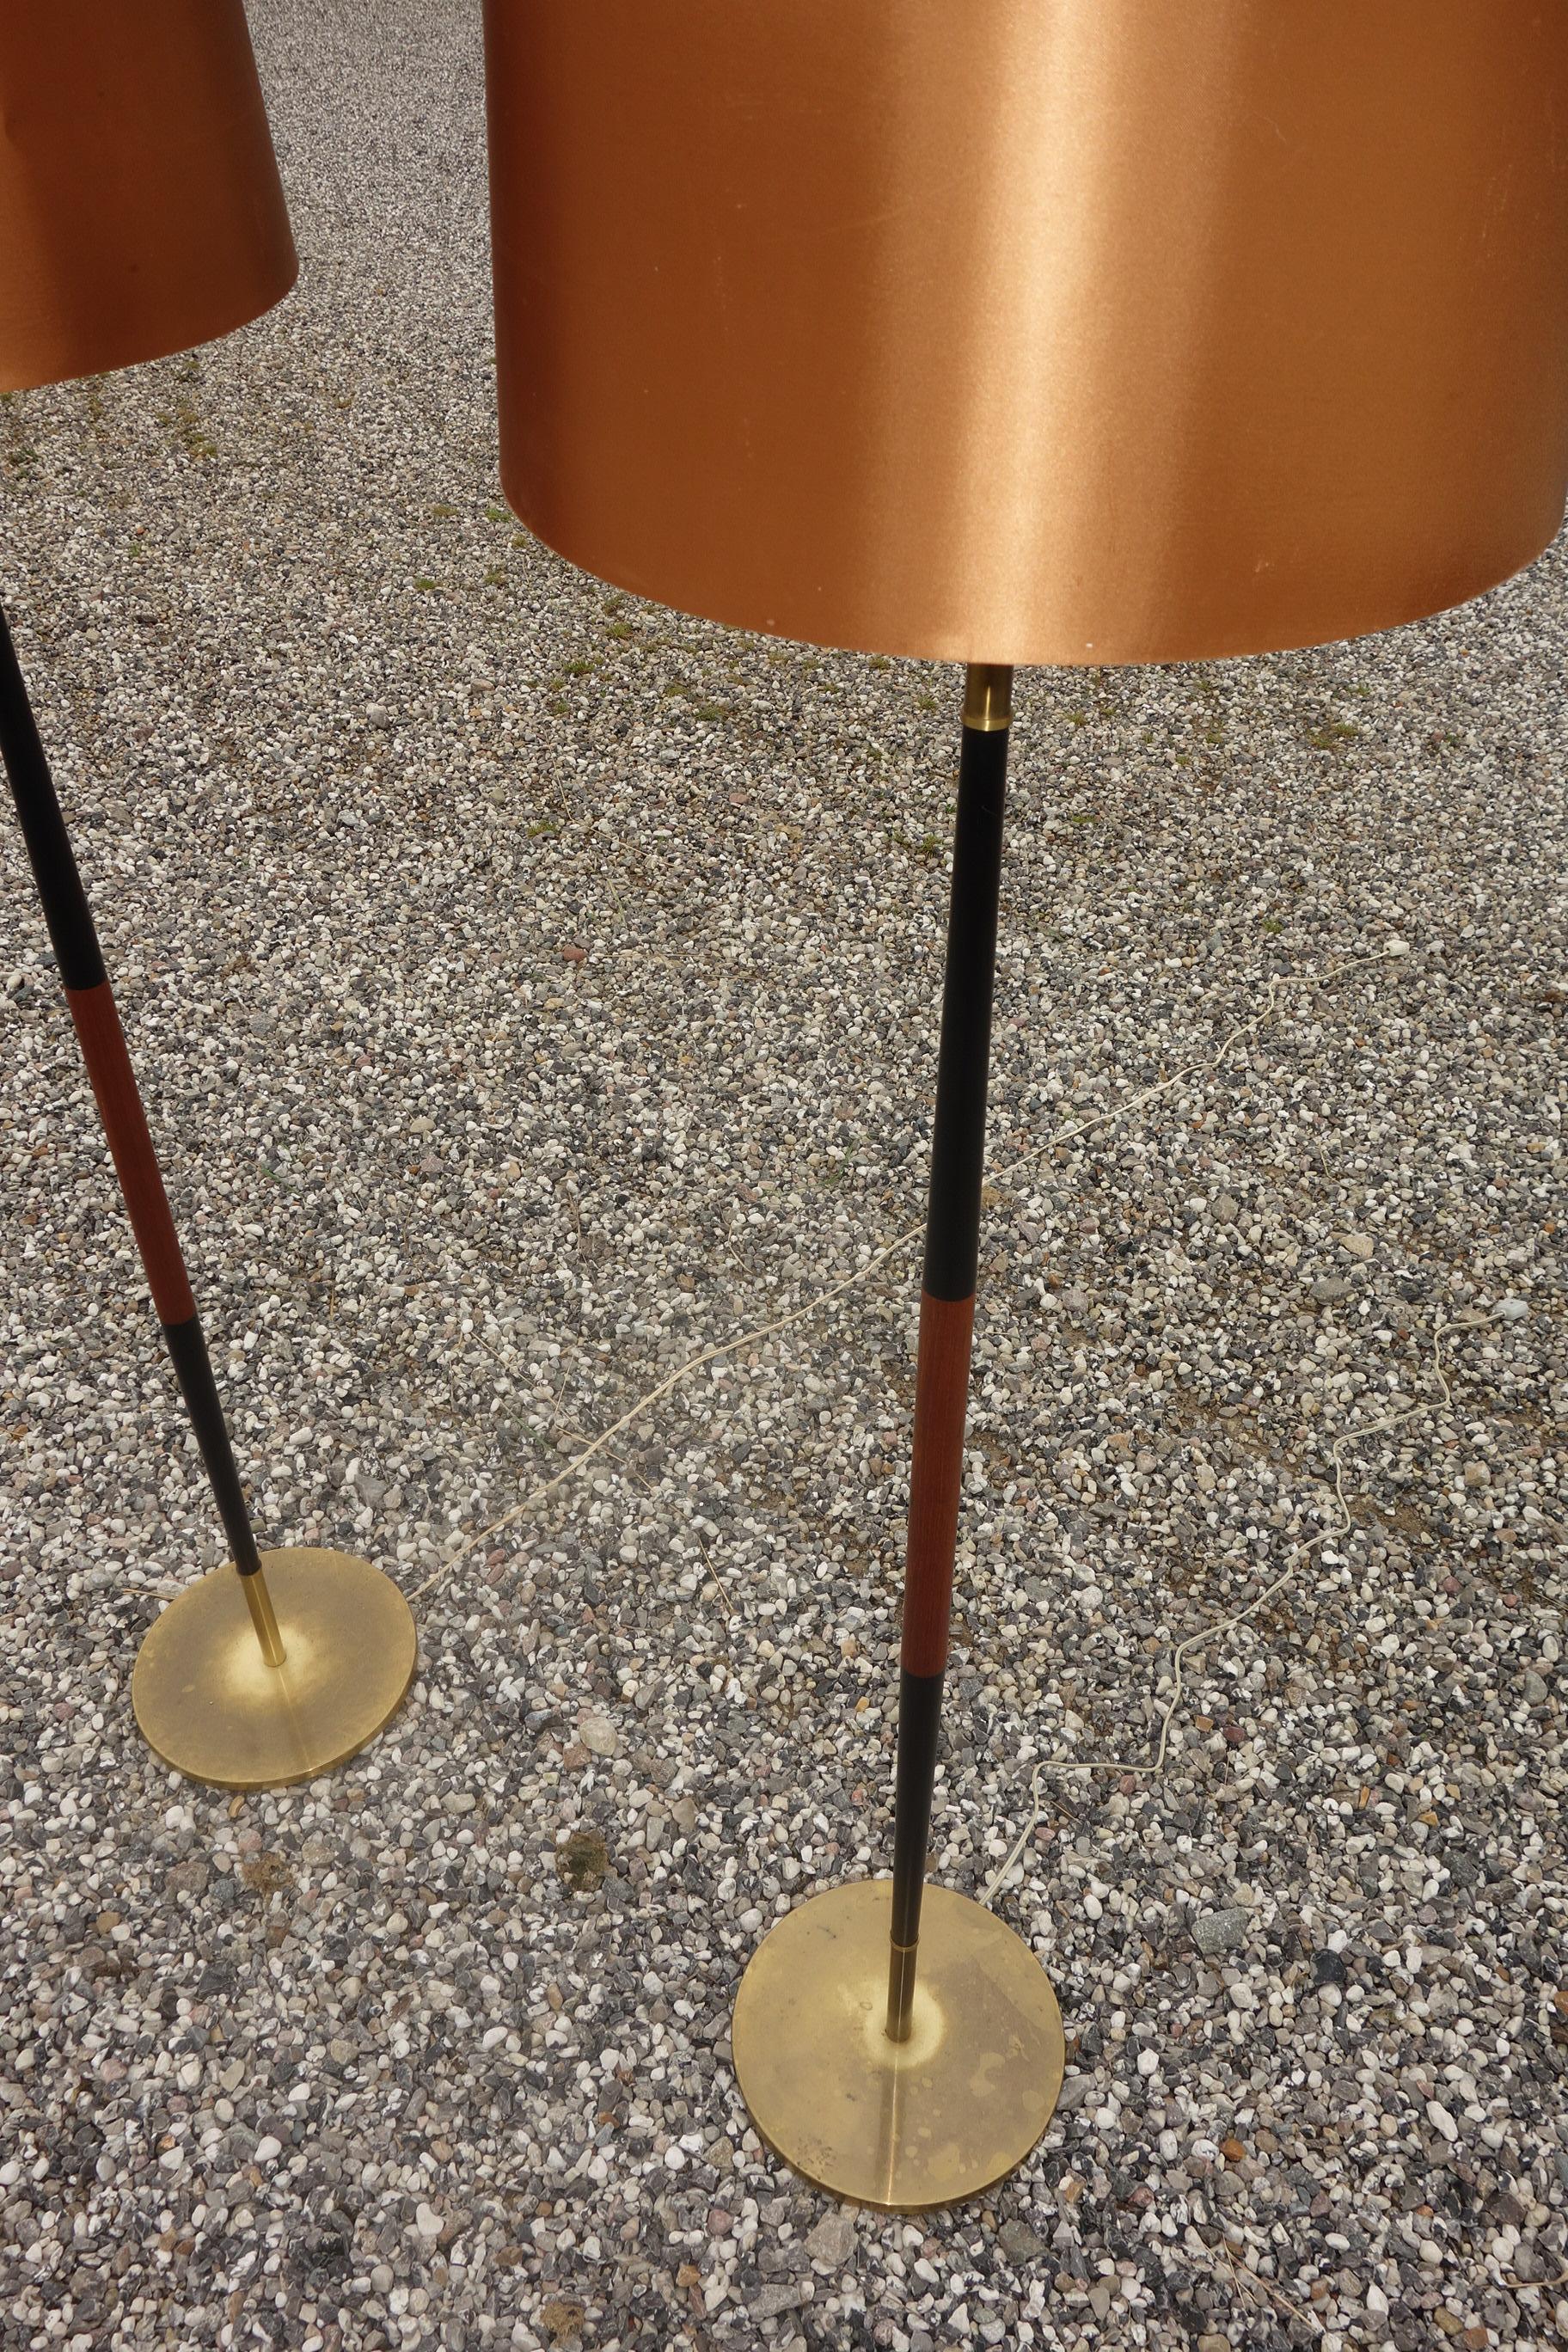 Scandinavian Modern Danish Design a Pair of Floor Lamps, Brass, Teak and Black Lacquered Metal 1960 For Sale